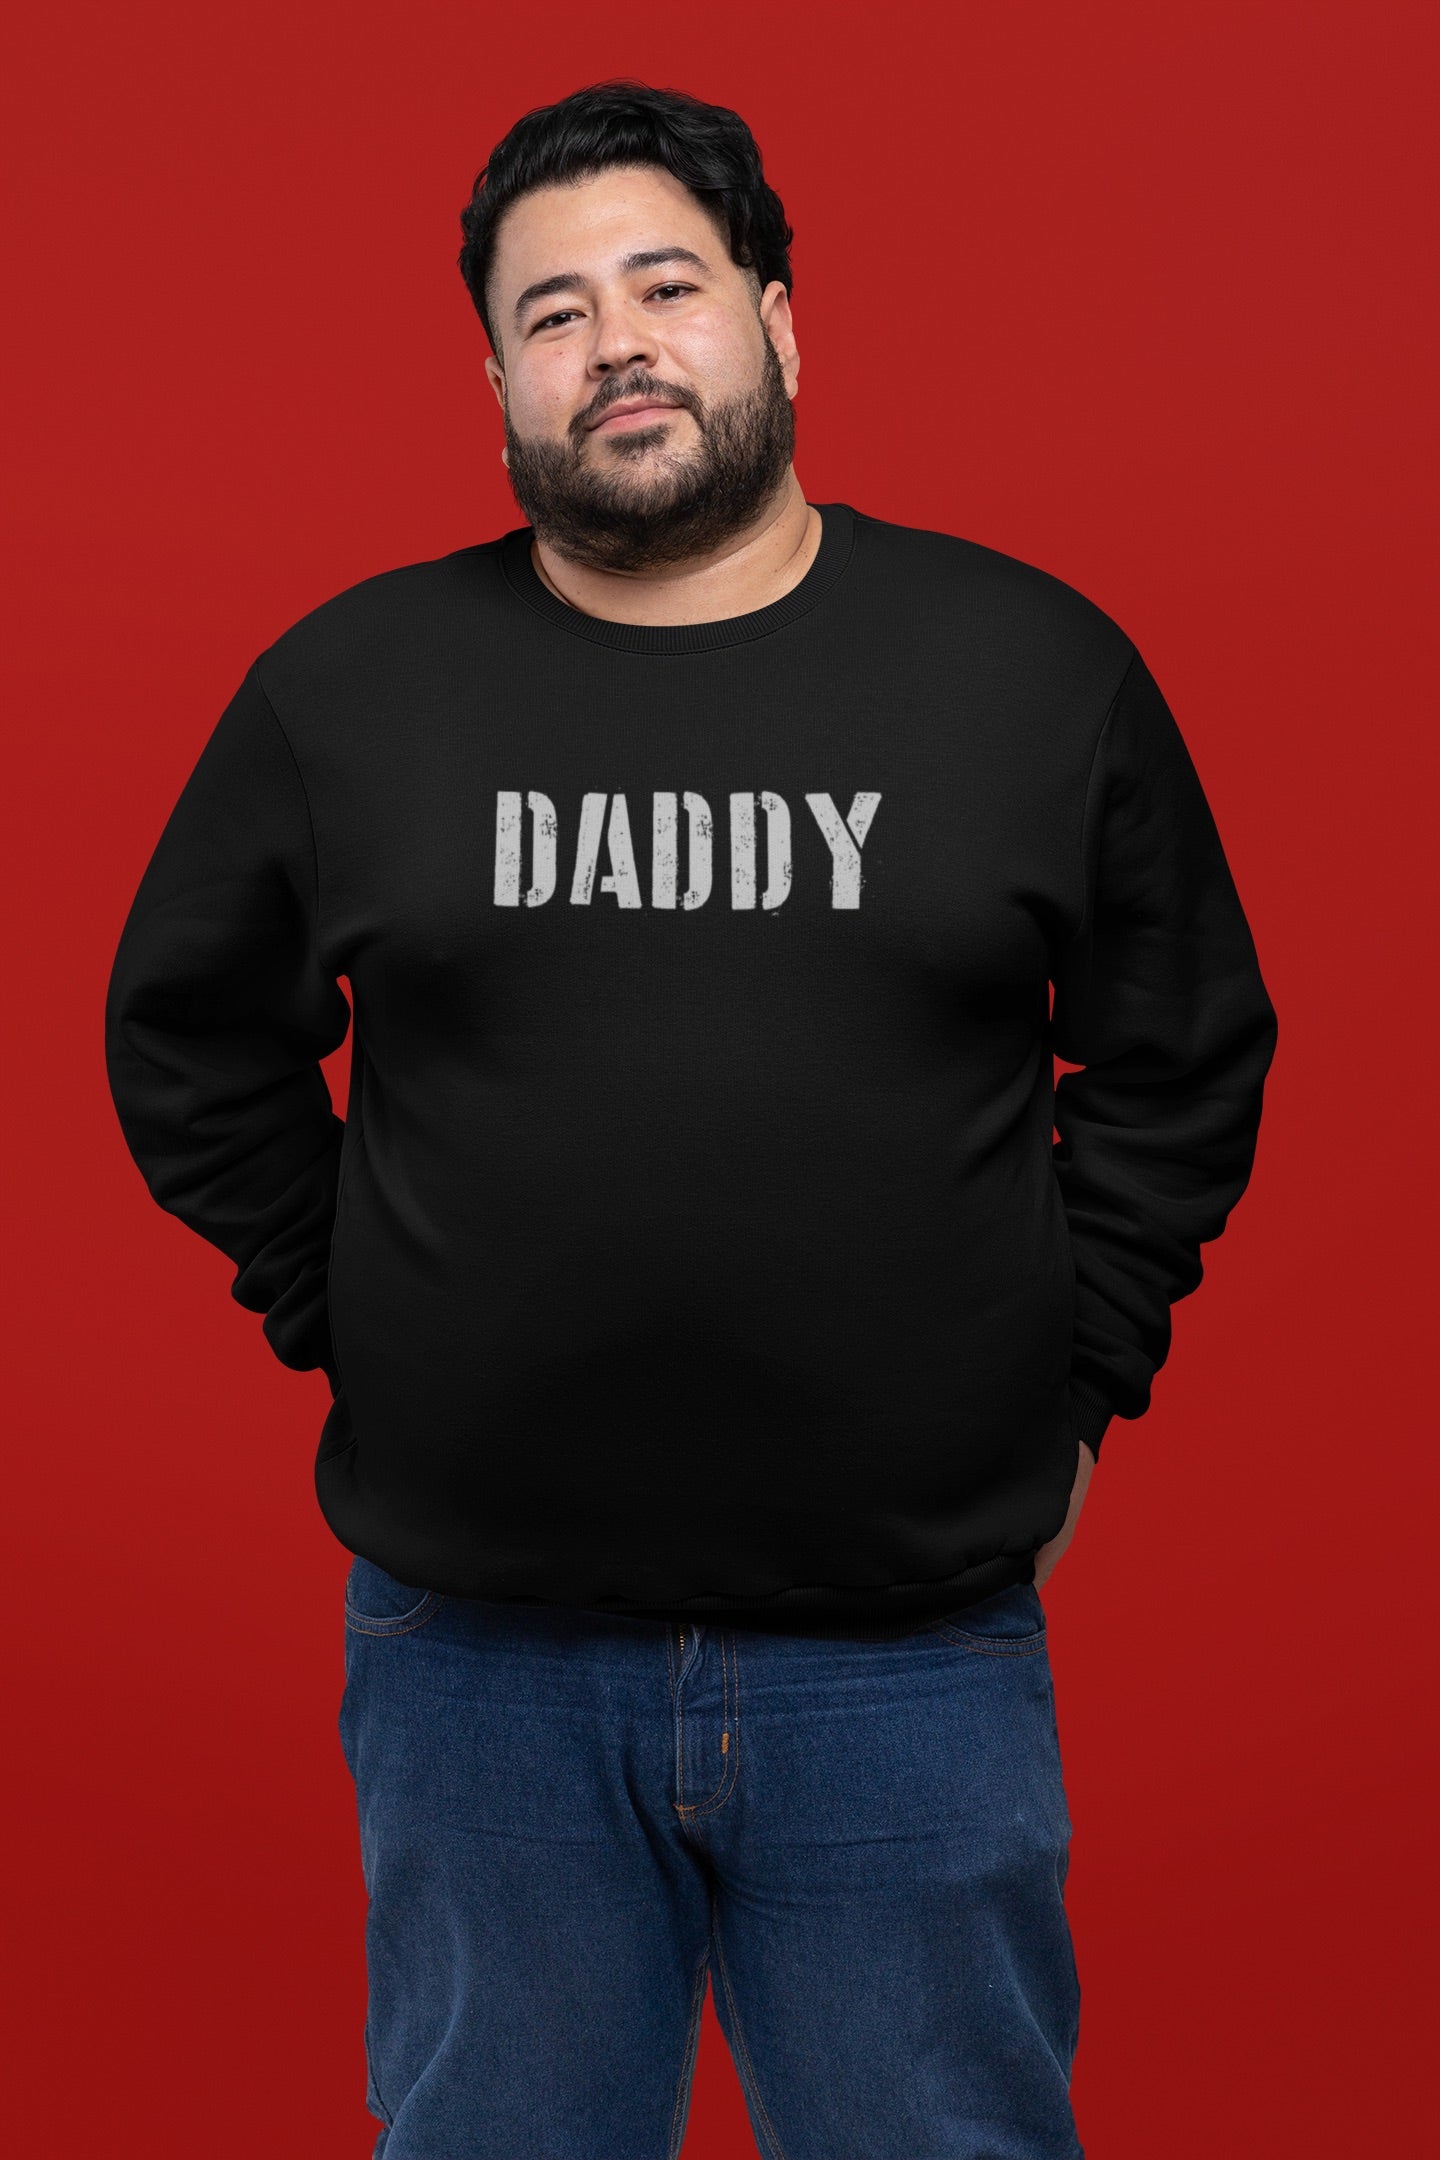 Daddy Organic Sweatshirt